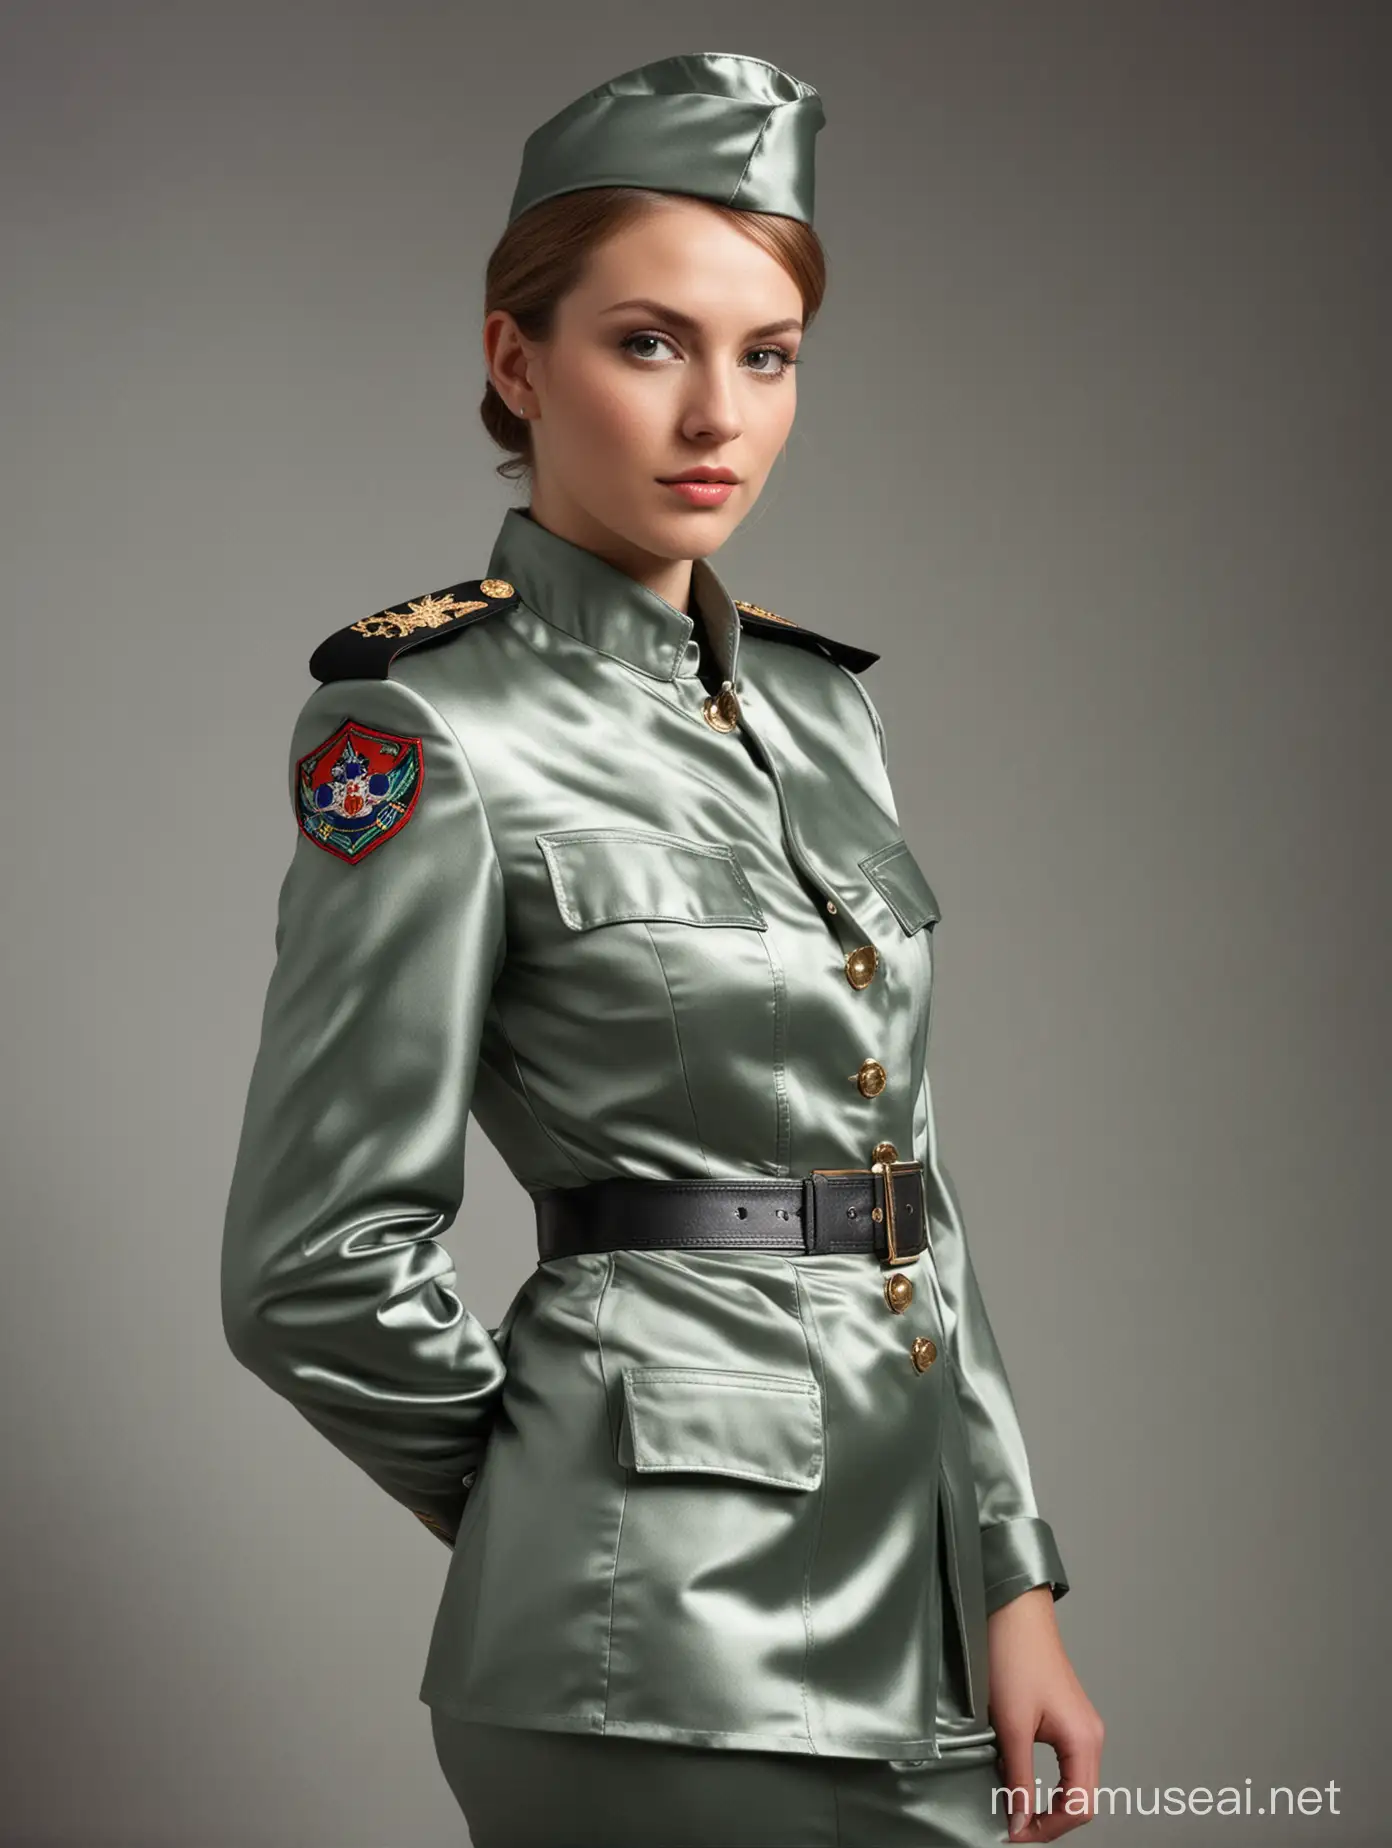 Elegant Woman in Shiny Satin Military Uniform